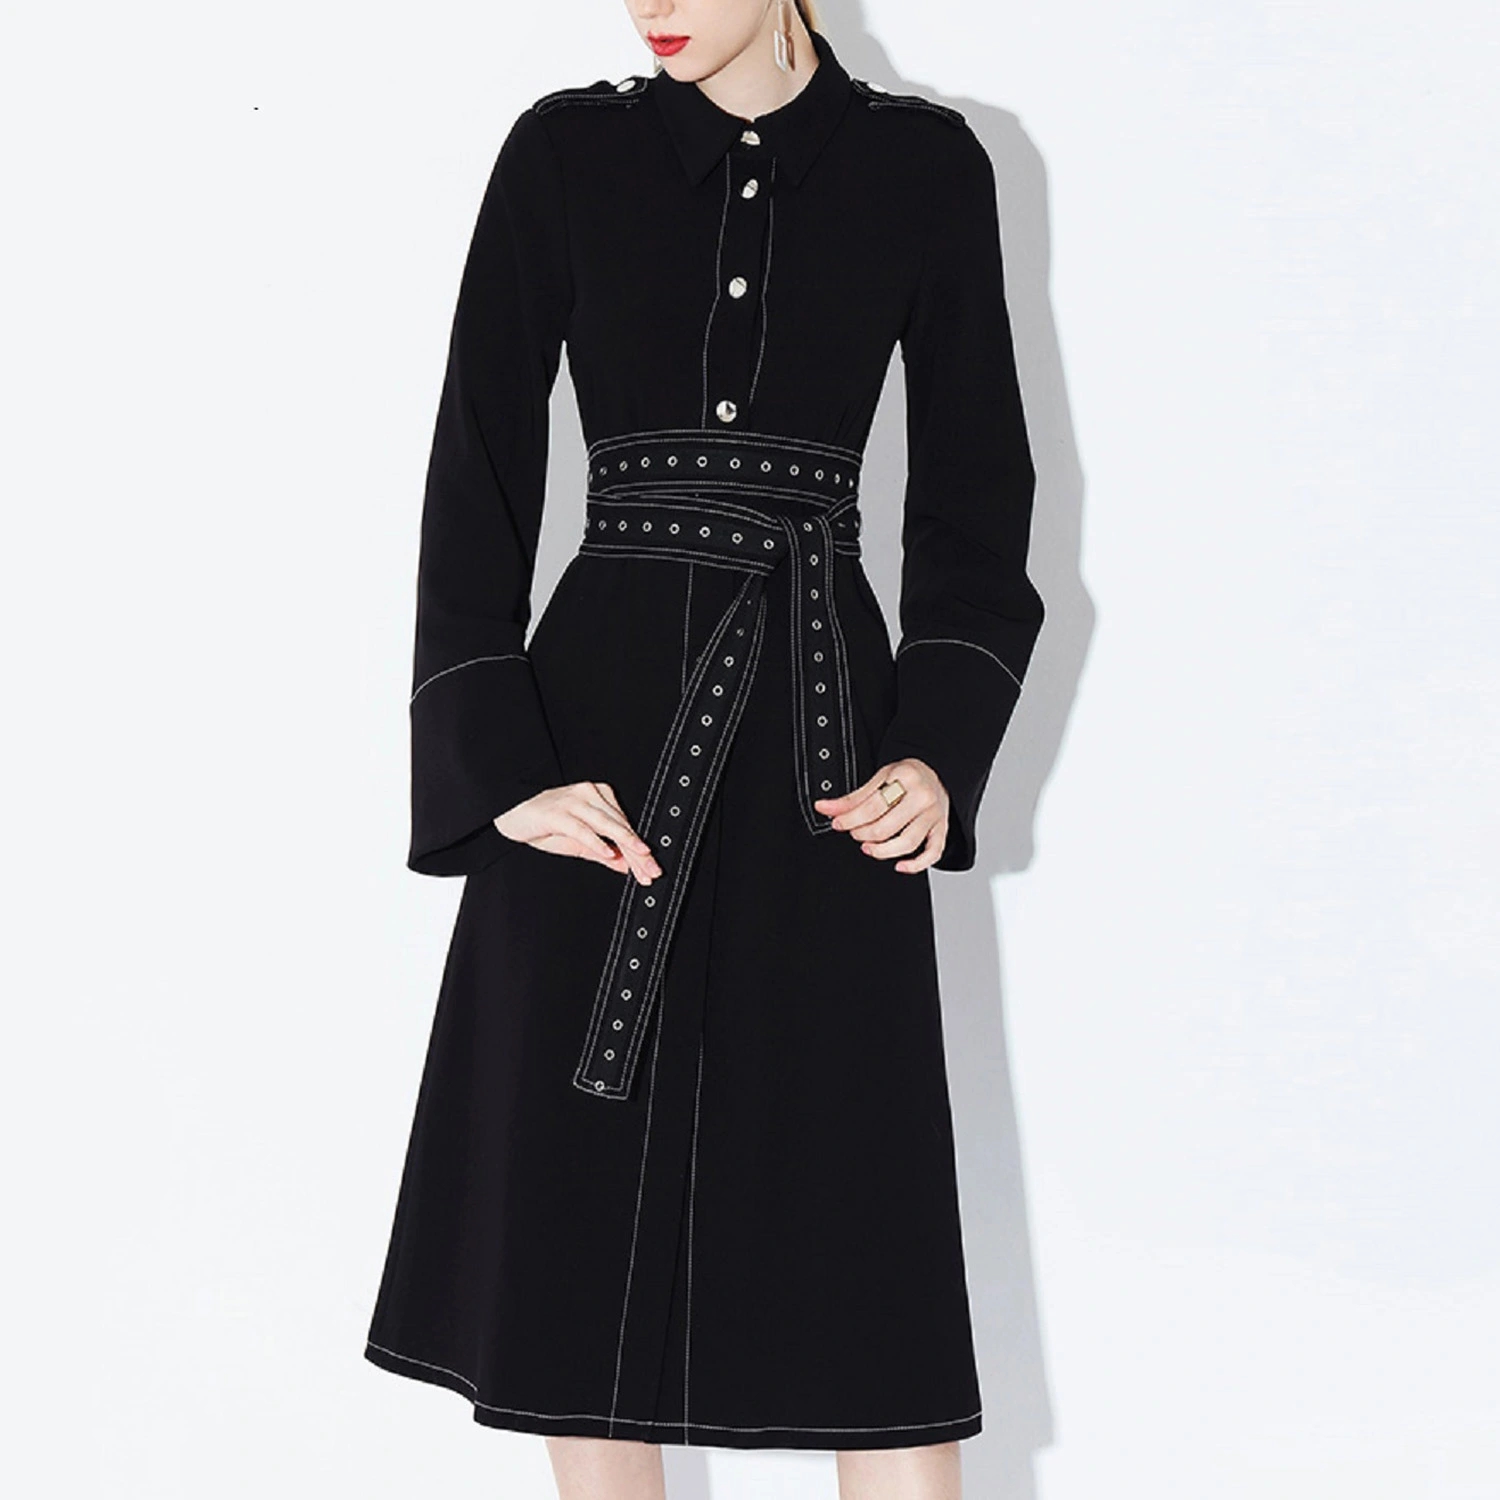 New-Design-Long-Sleeve-Slim-Autumn-High-Fashion-Woman-s-Dress-Coat.webp (2).jpg